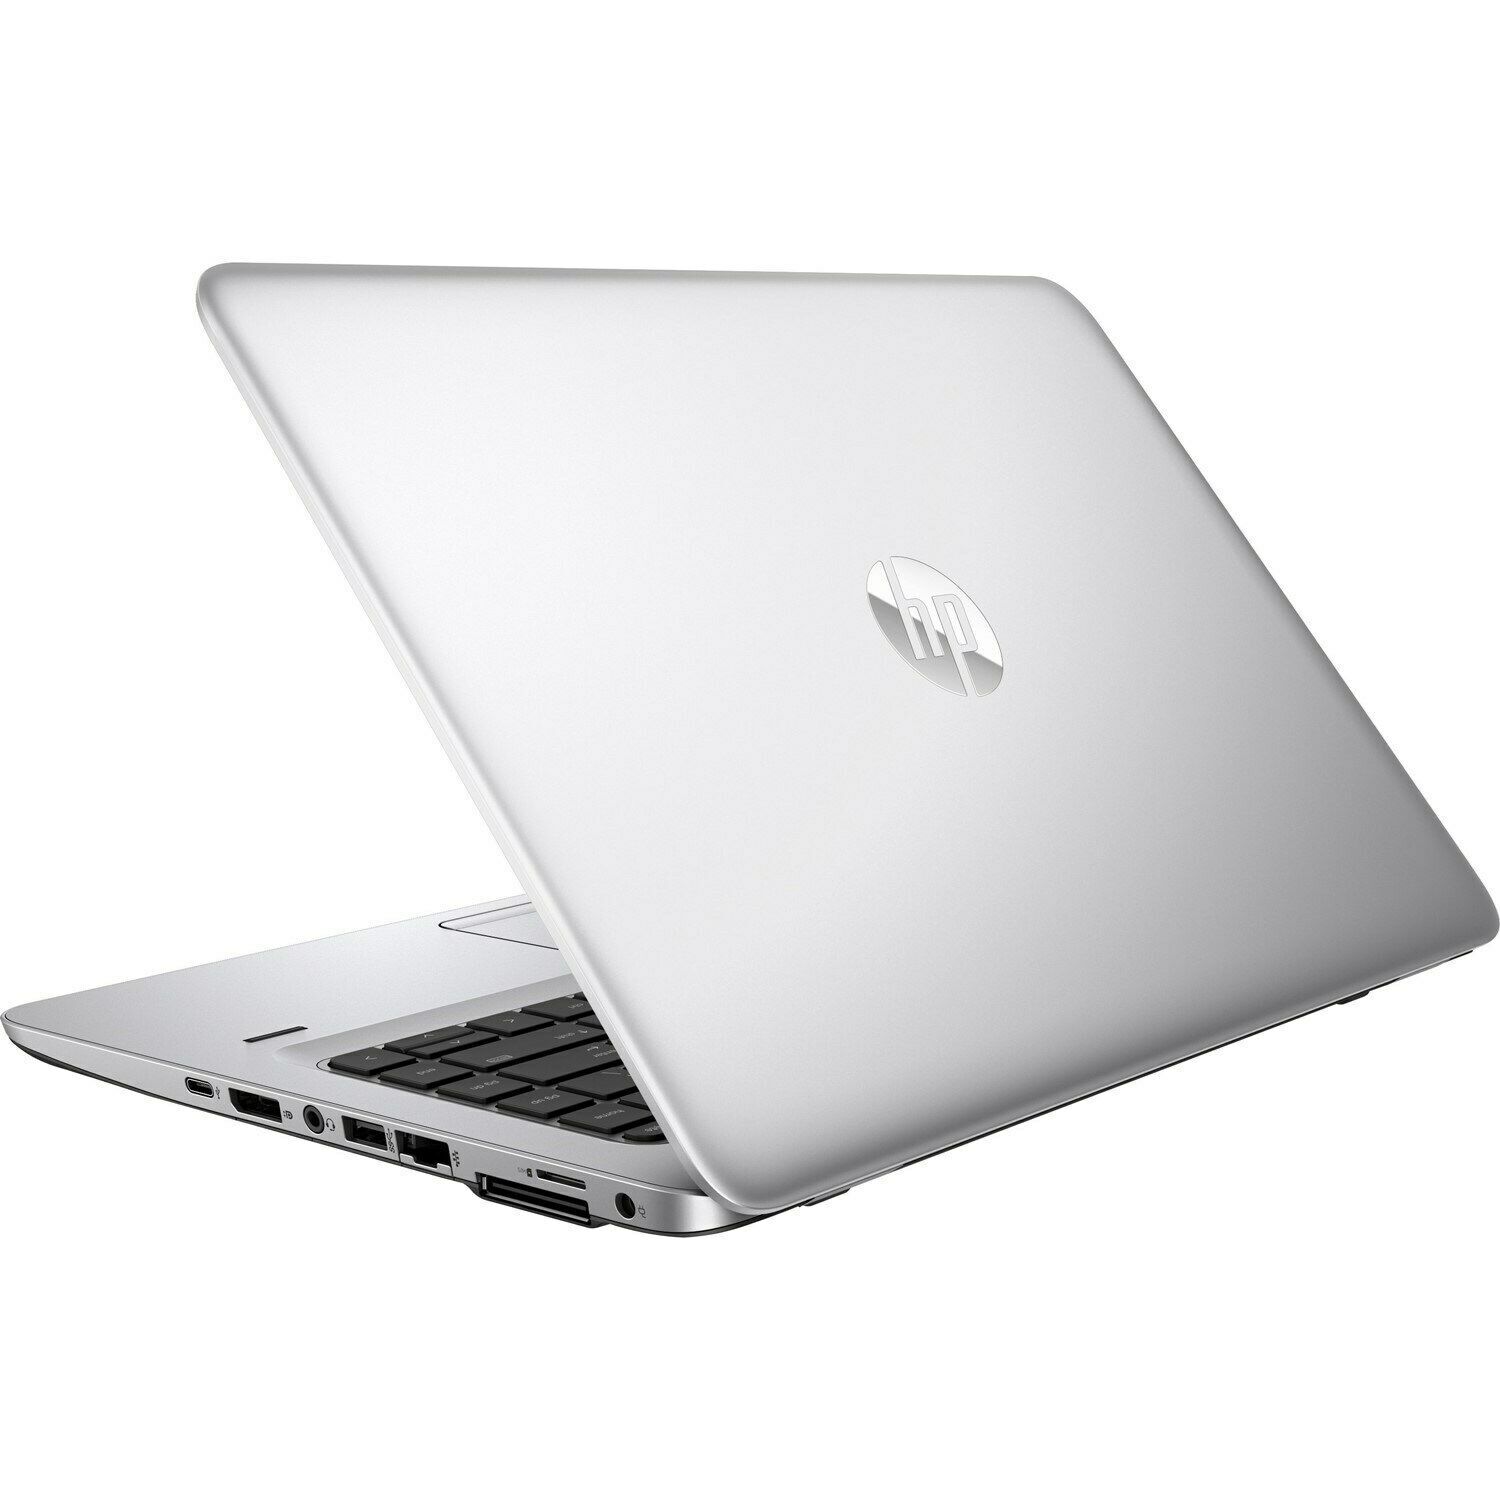 HP EliteBook 840 G4 Intel i5 7300U 2.60GHz 8GB RAM 256GB SSD 14" Win 10 - B Grade Image 2